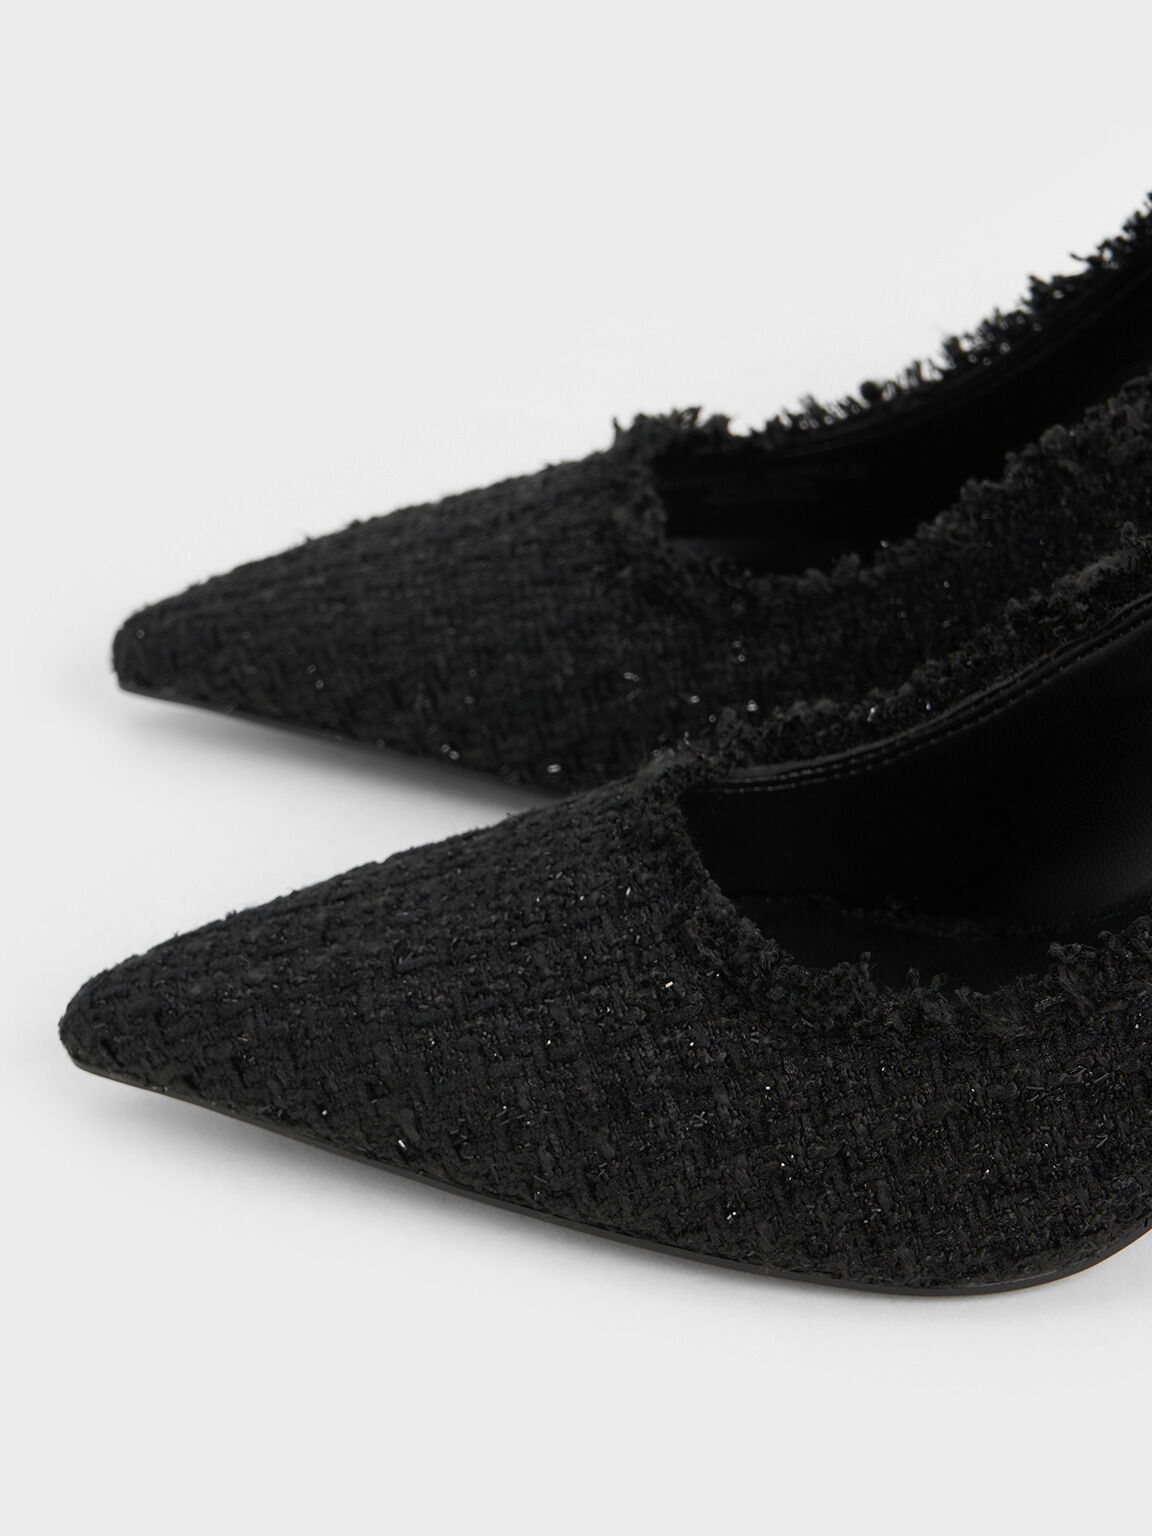 Tweed Pointed-Toe Stiletto Pumps, Black Textured, hi-res